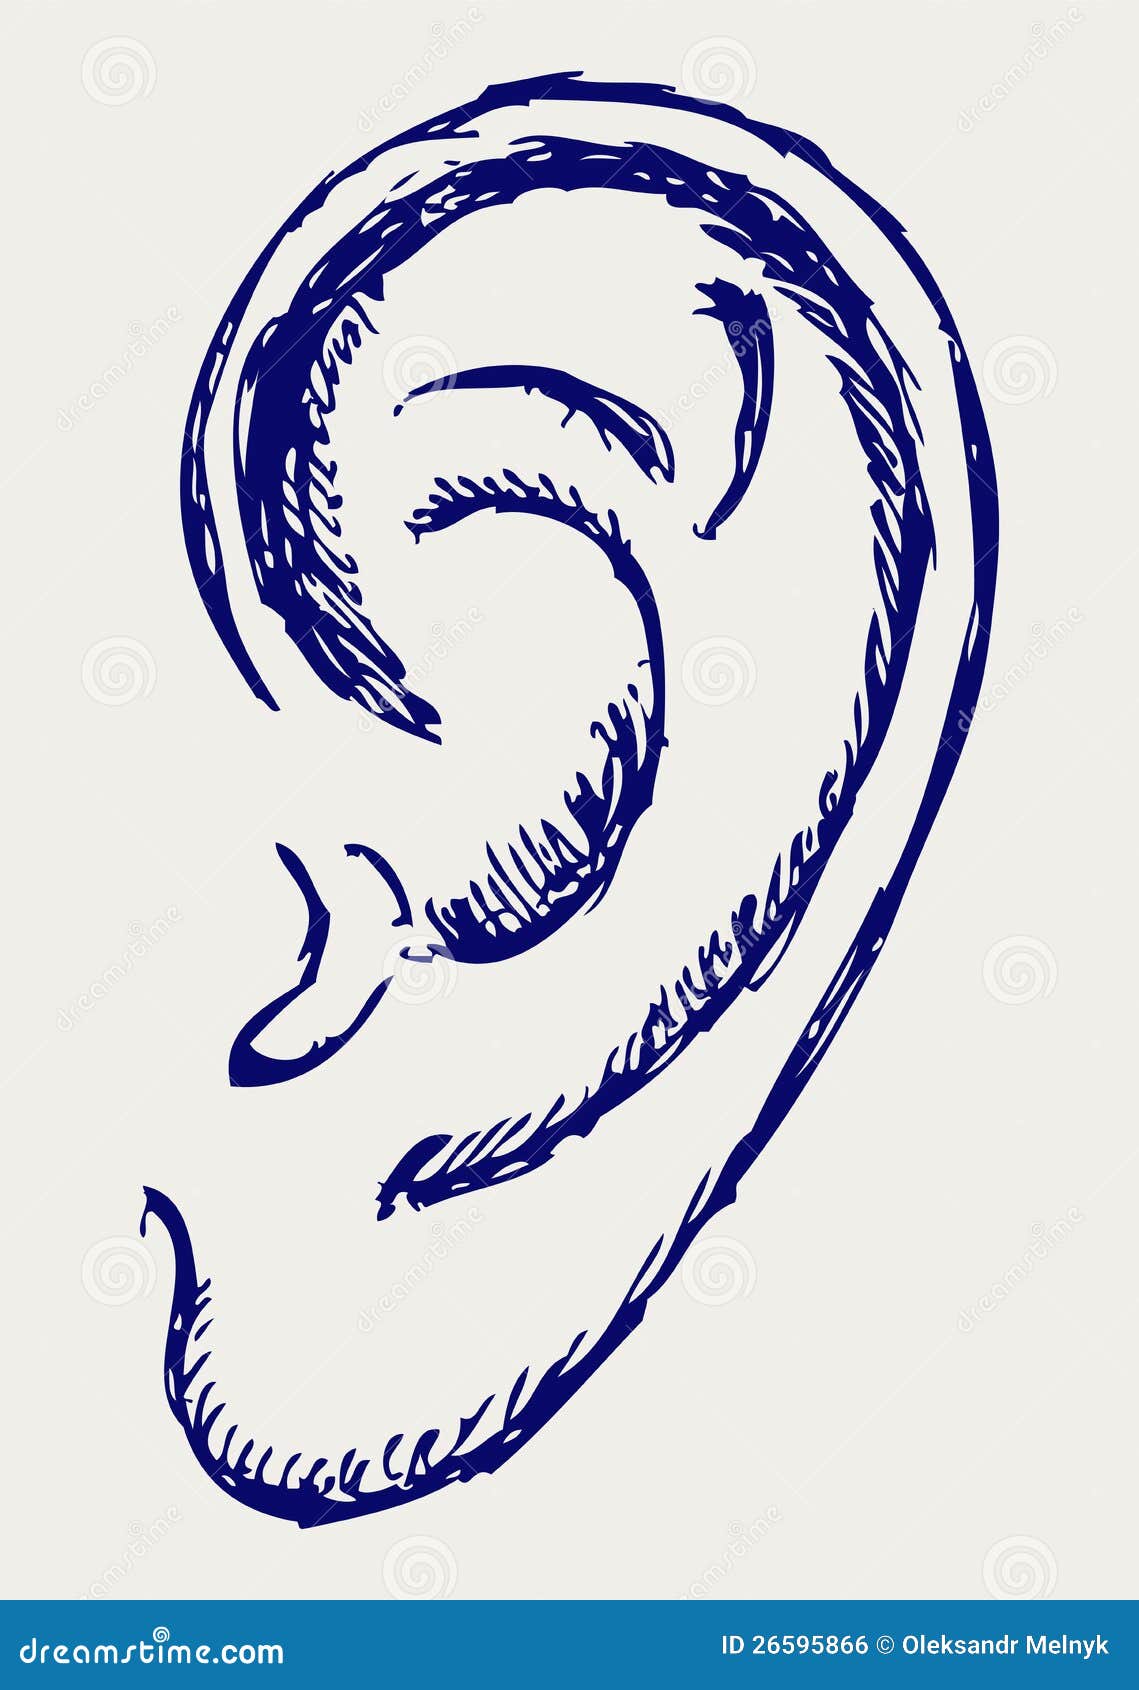 human ear clip art free - photo #33